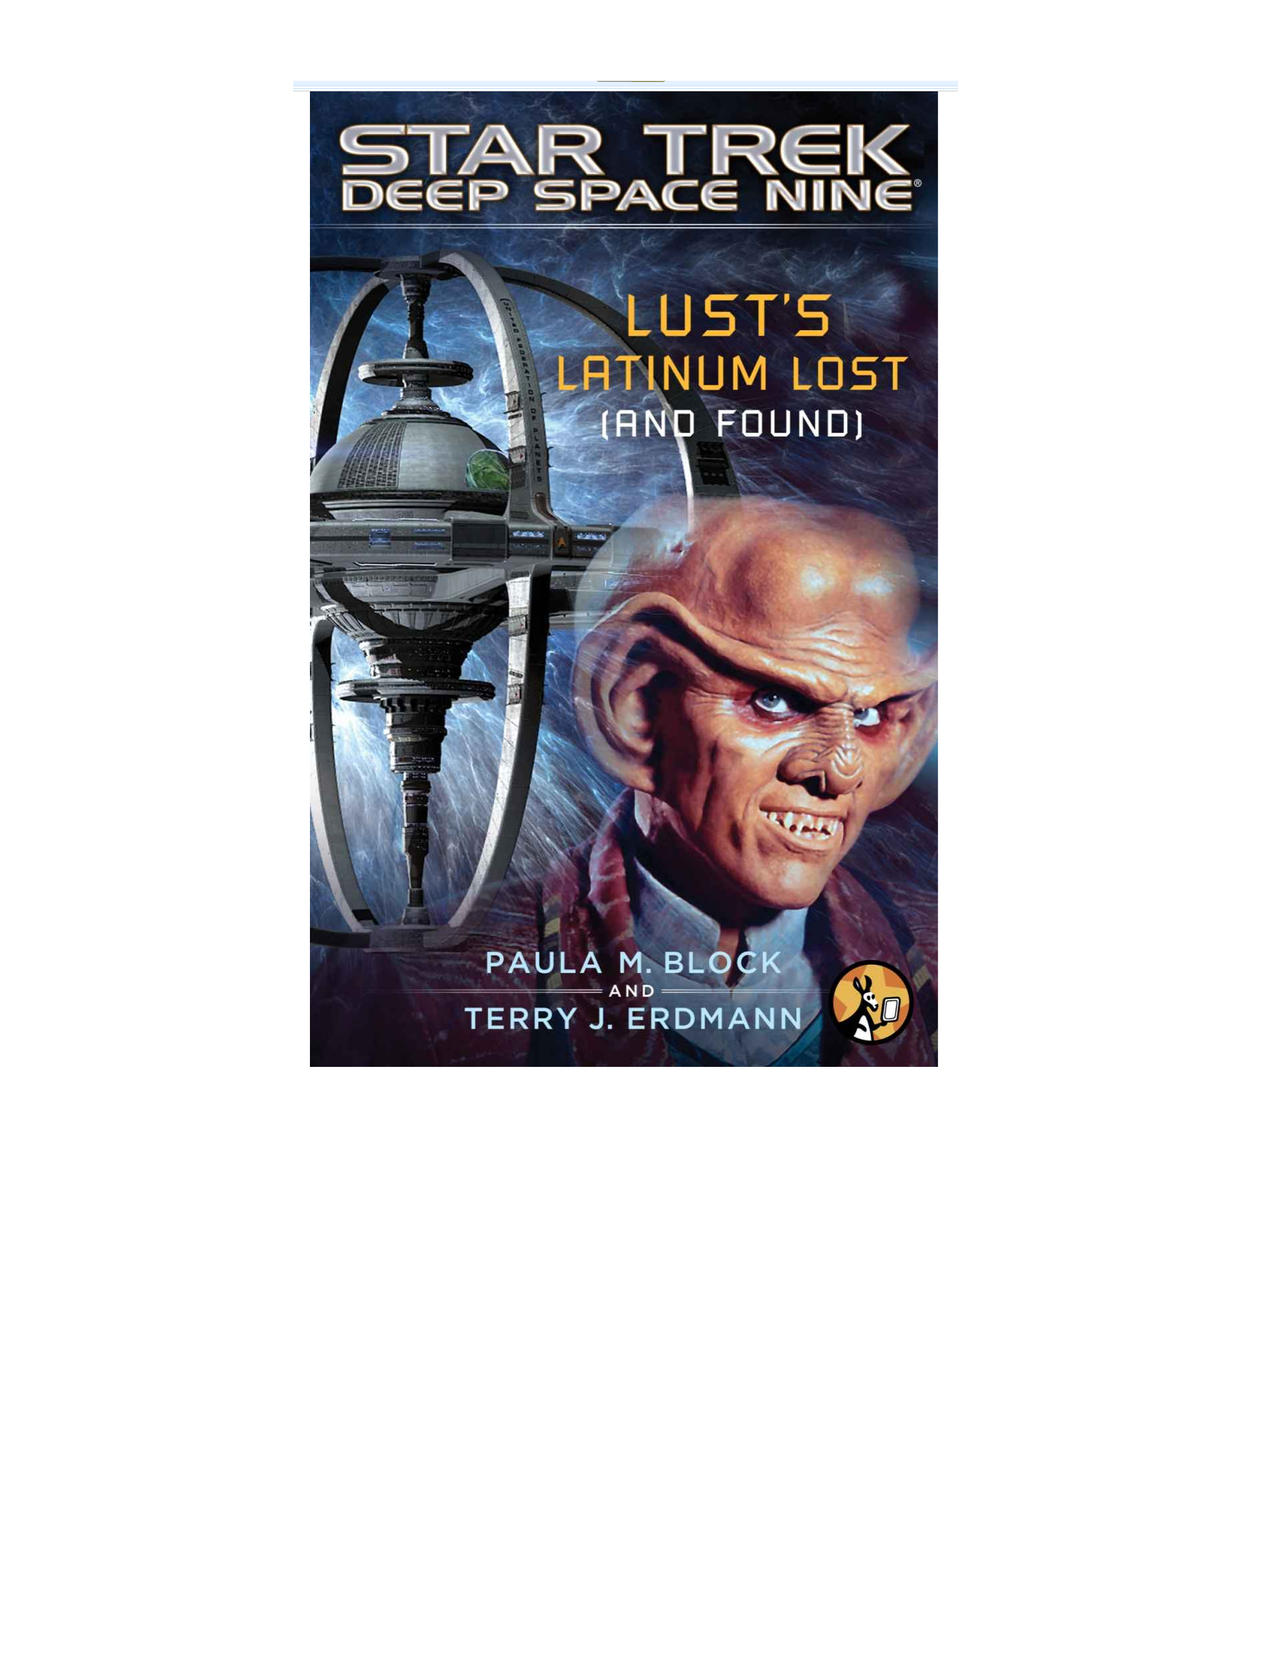 Drexler/Ries Star Trek e-book cover